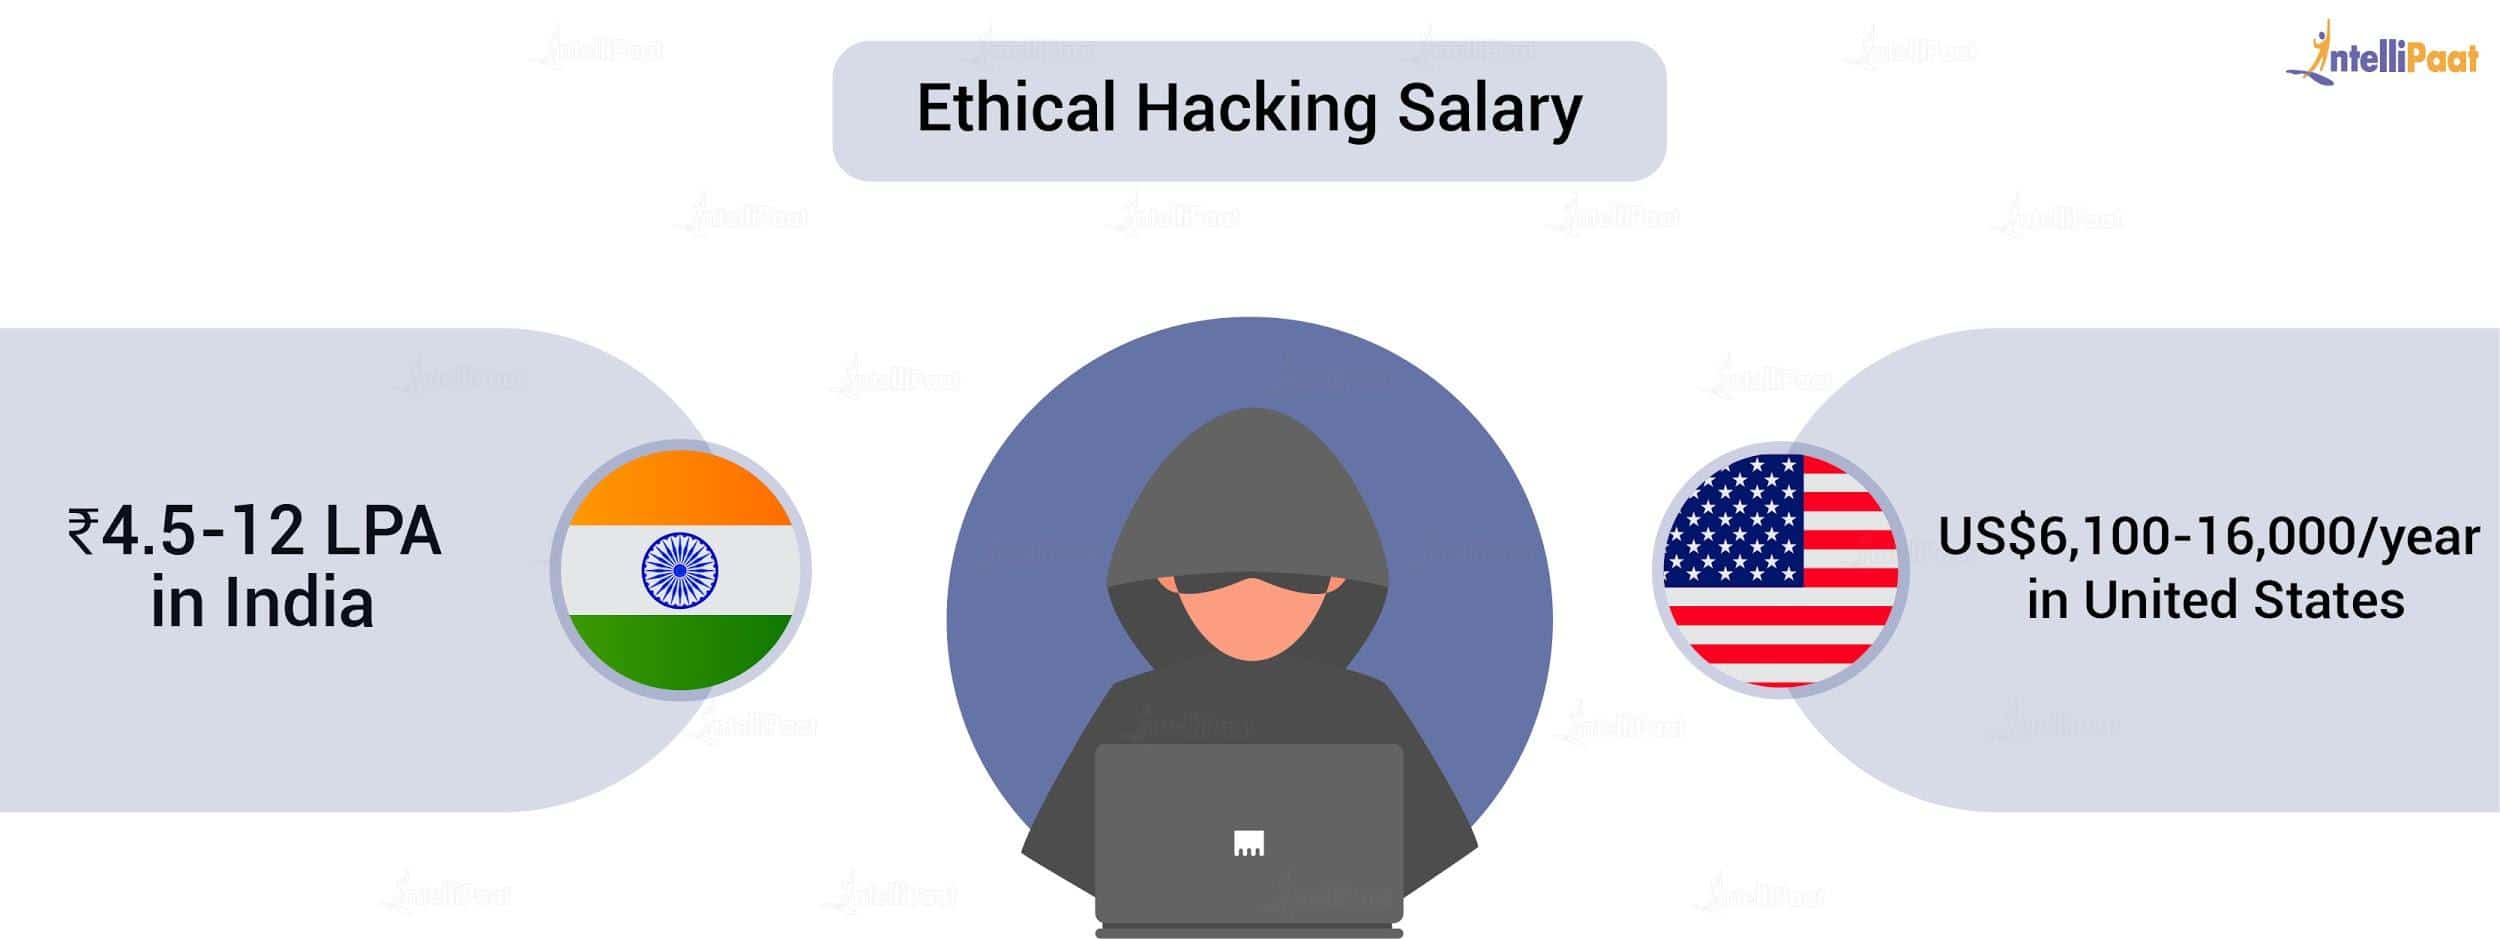 Ethical Hacker Salary